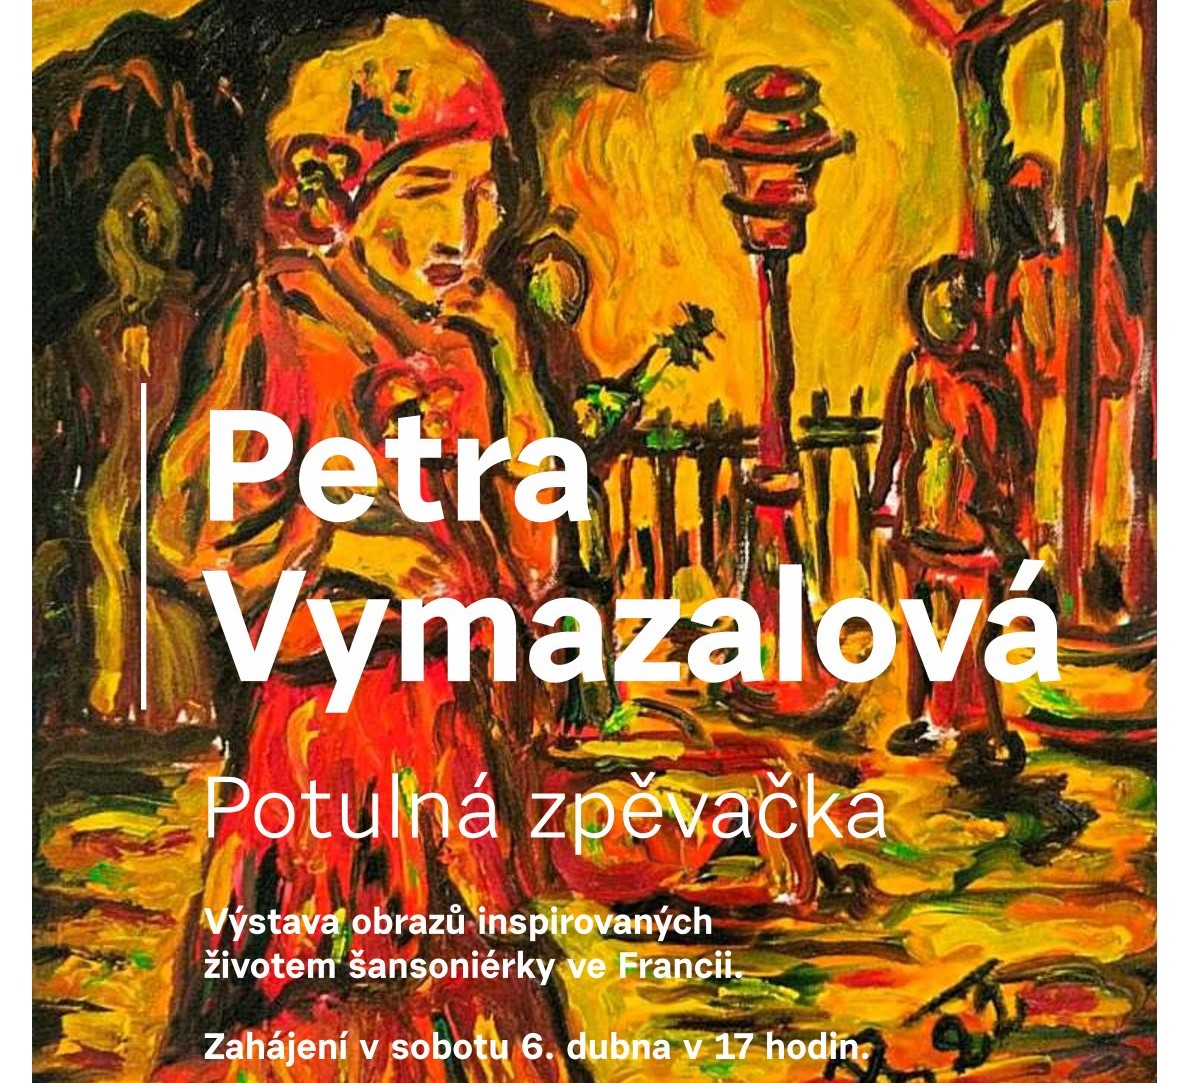 Potulná zpěvačka - výstava Petry Vymazalové